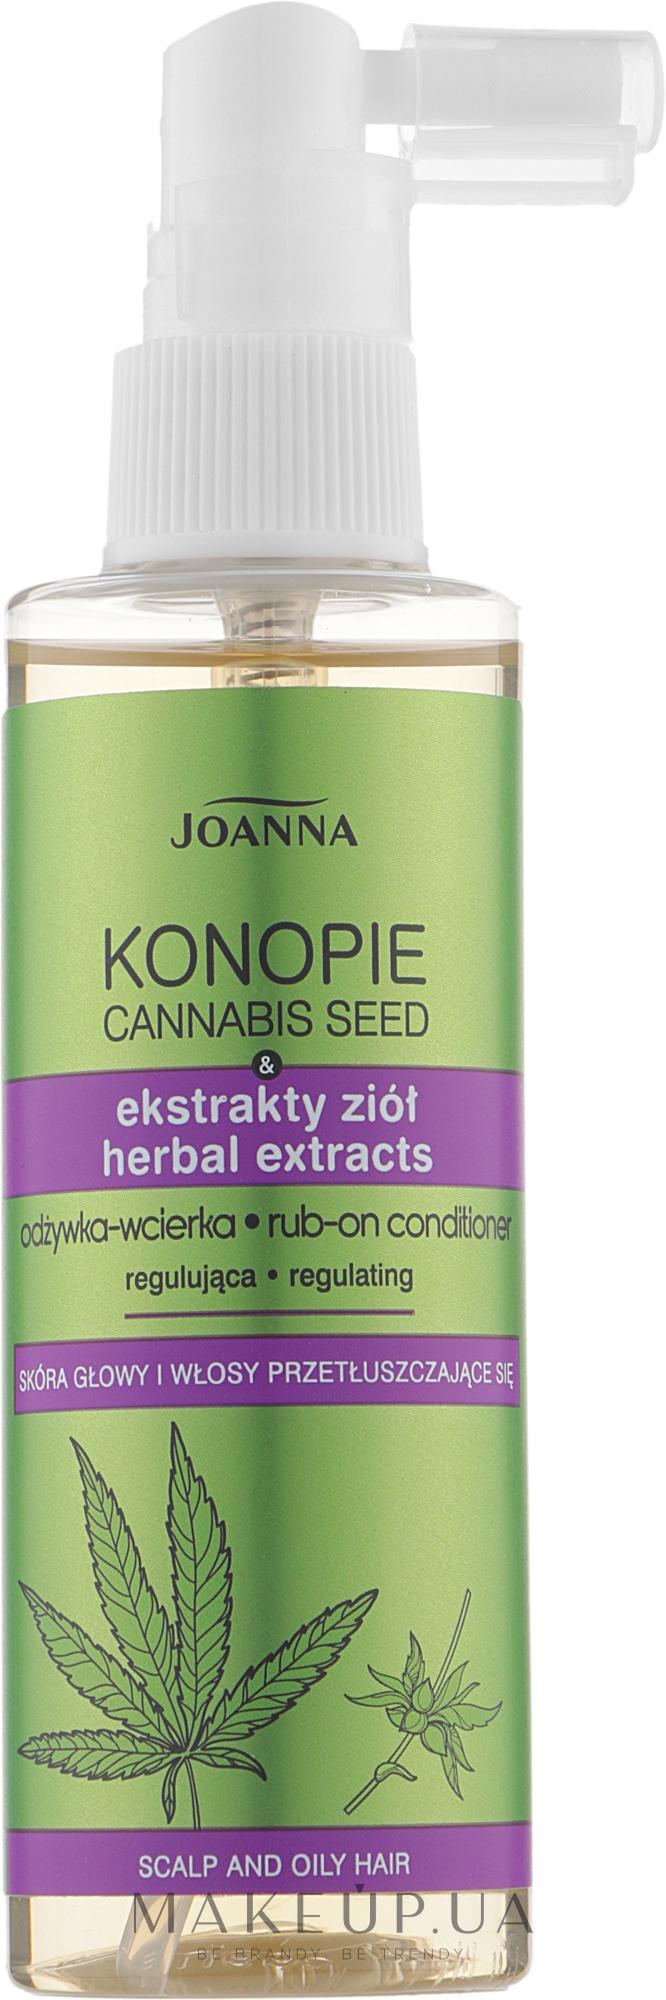 Лосьйон-кондиціонер для жирного волосся - Joanna Cannabis Seed Herbal Extracts Rub-on Conditioner — фото 100ml